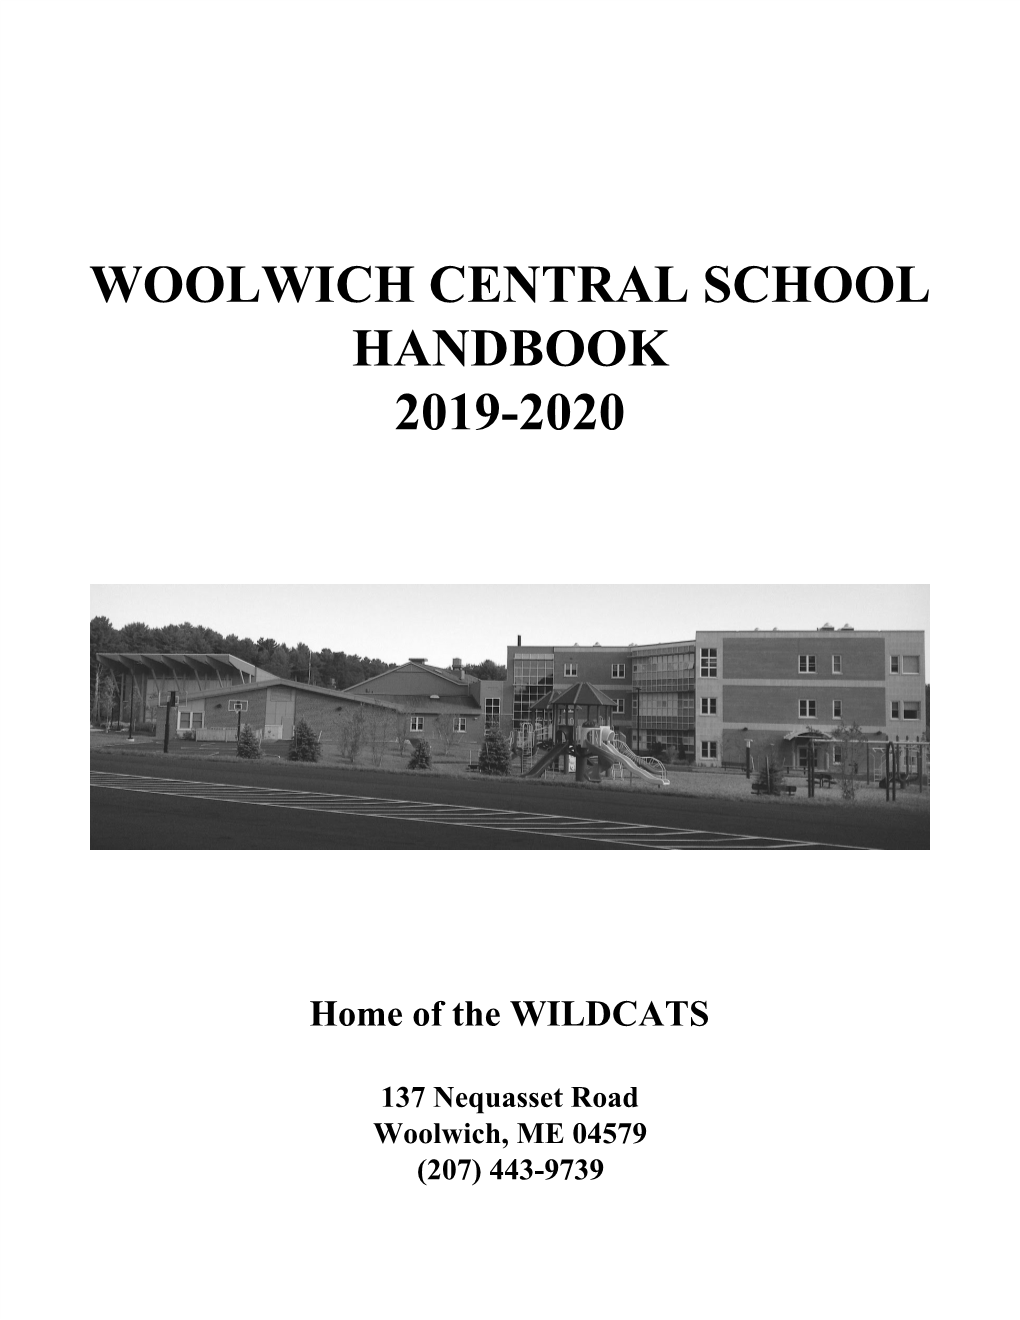 Woolwich Central School Handbook 2019-2020